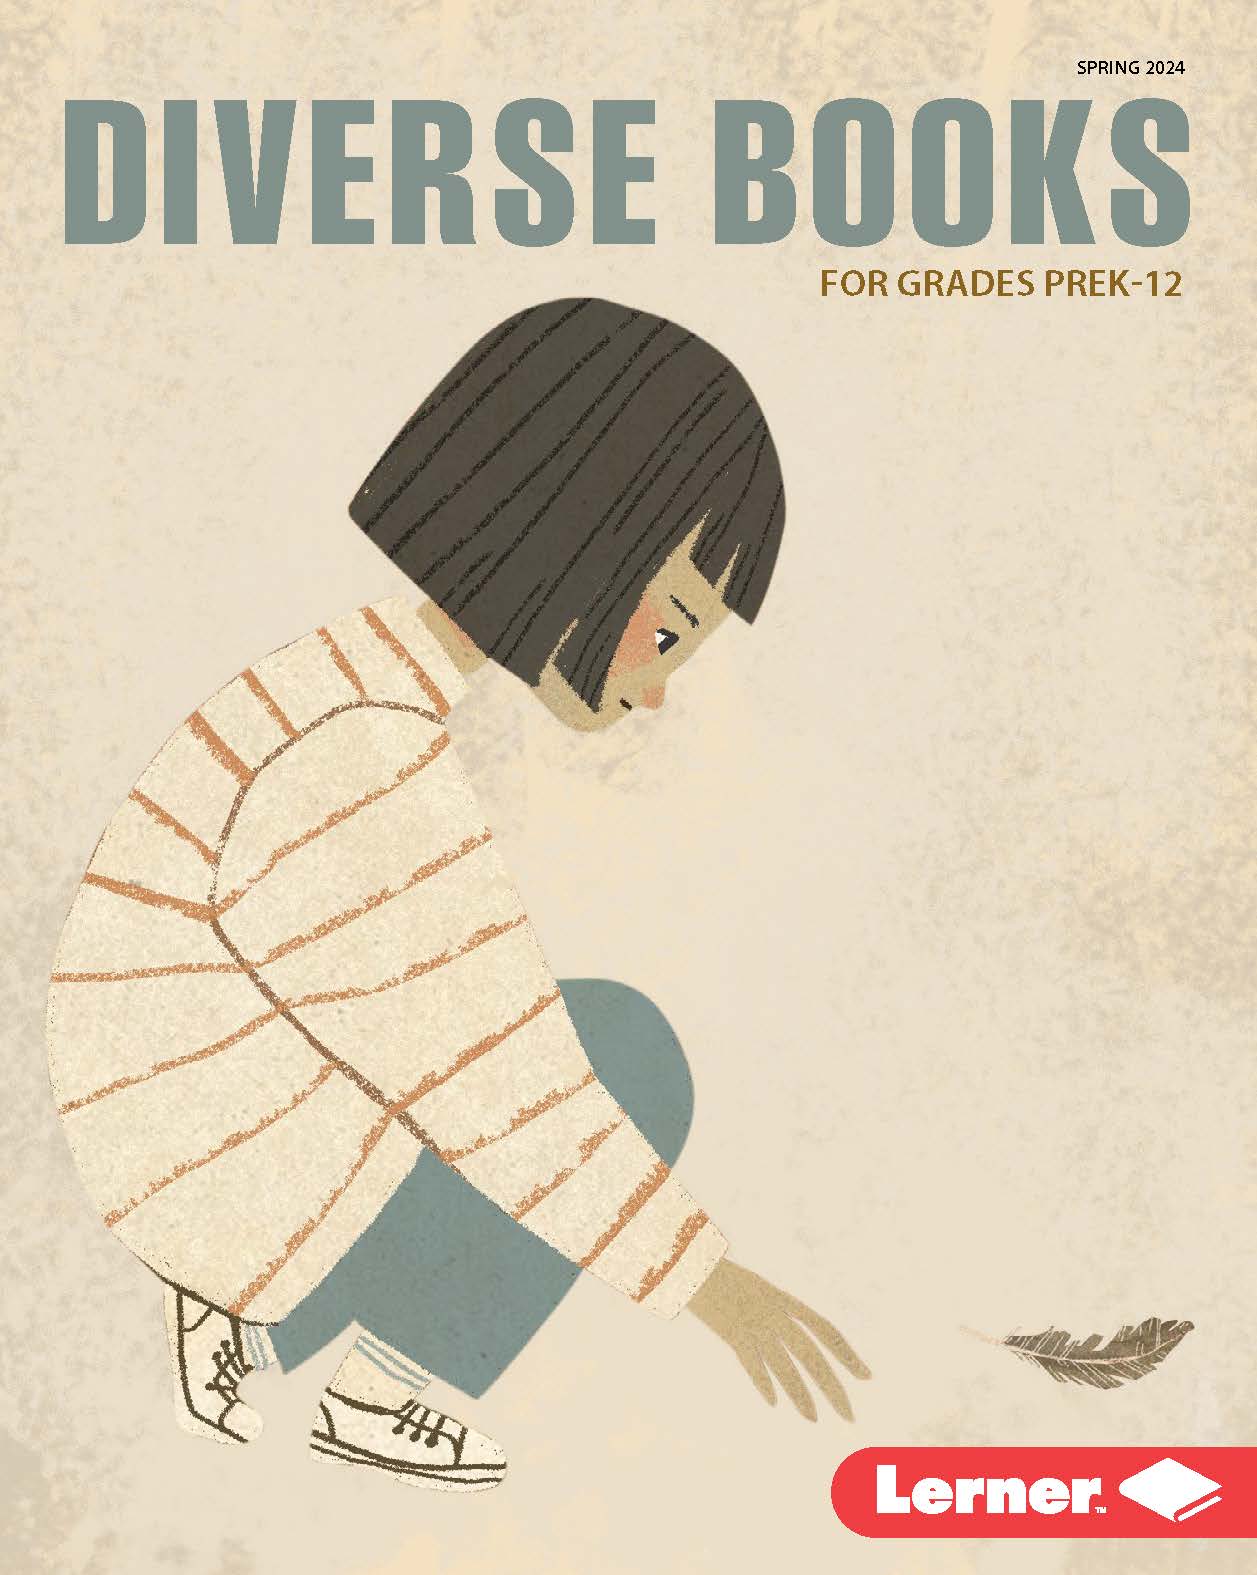 Diverse Books Catalog: Cover